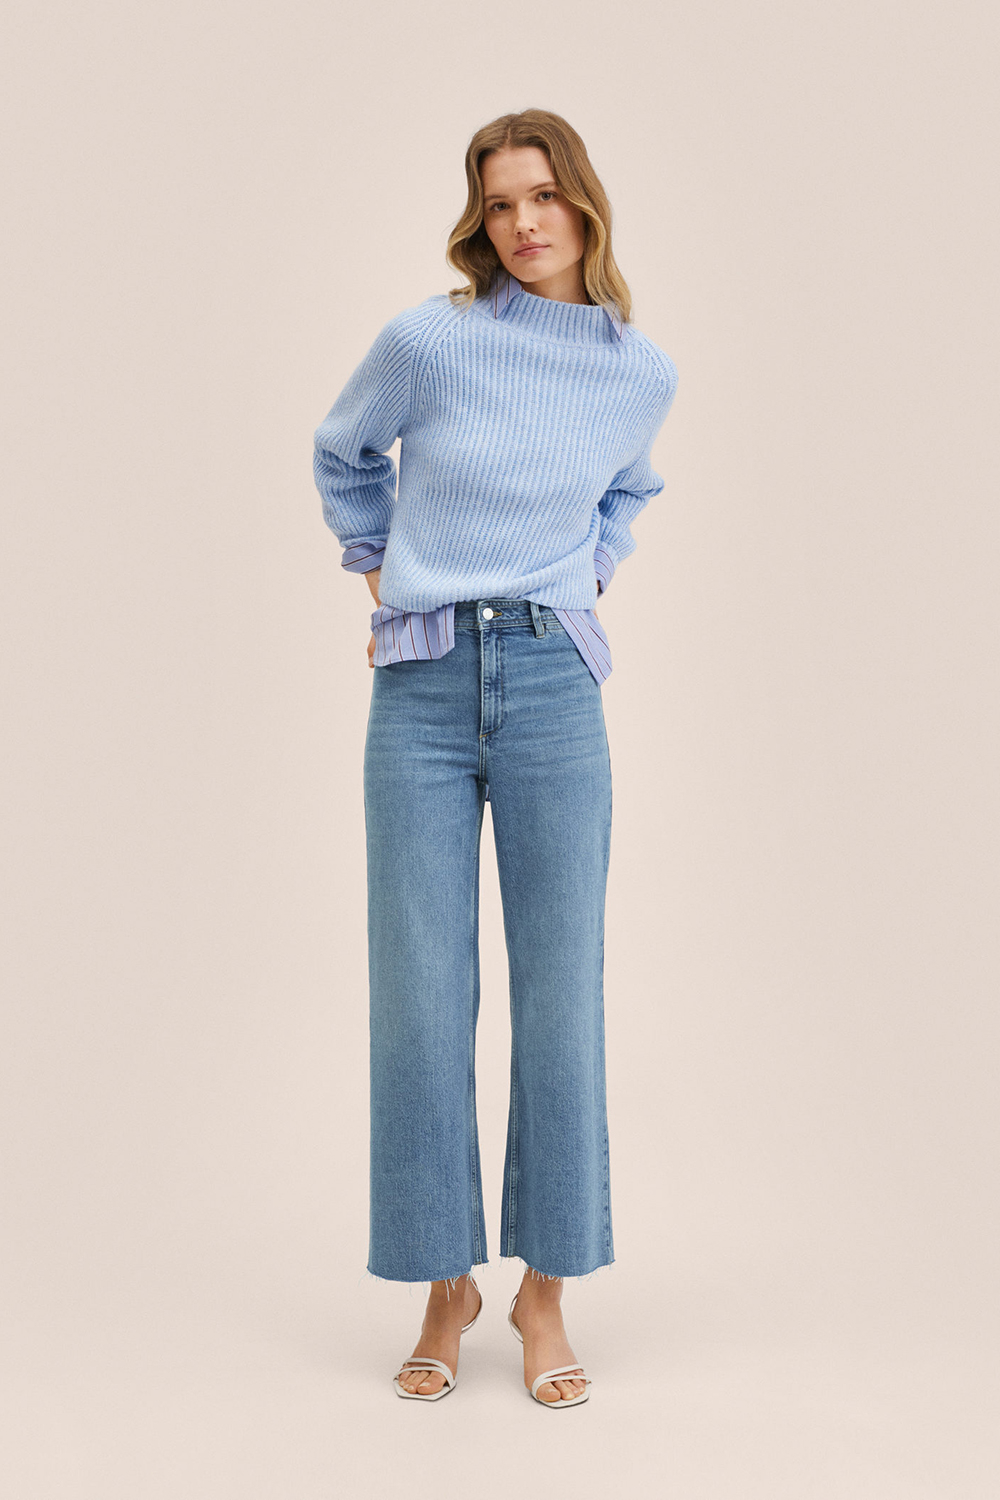 Mango Catherin Jeans | Odel.lk